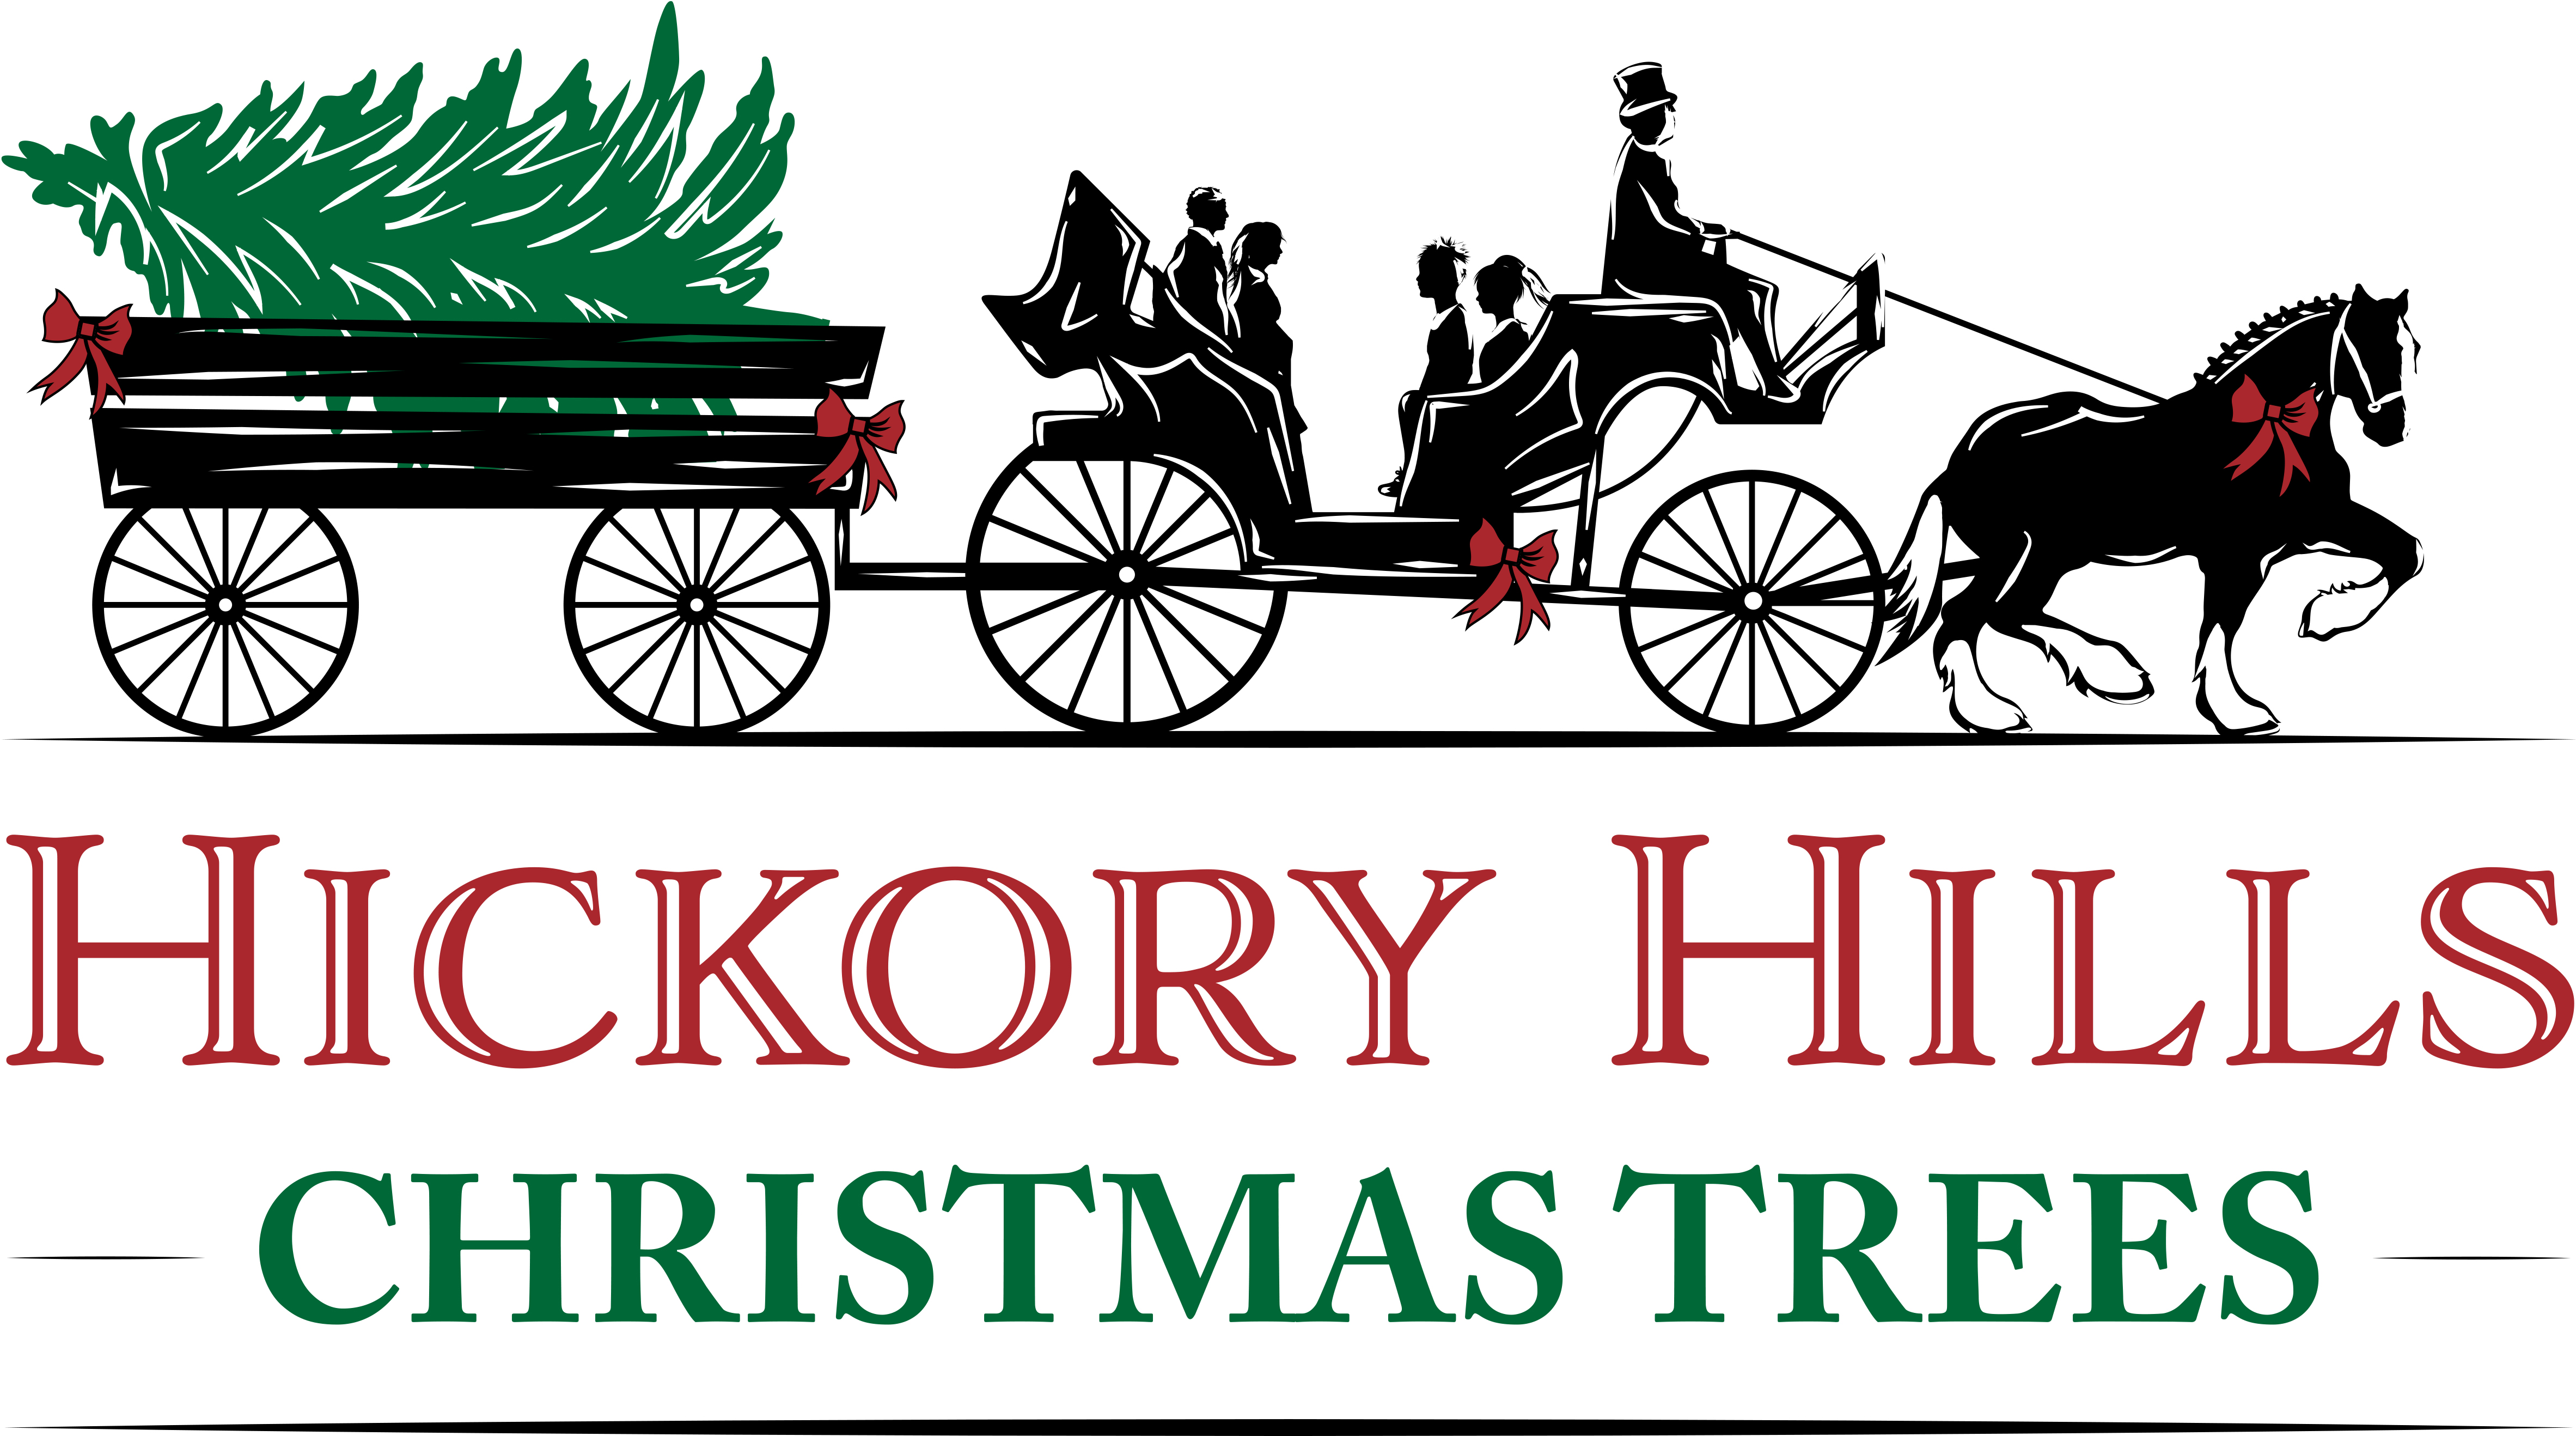 Hickory JHills Christmas Trees